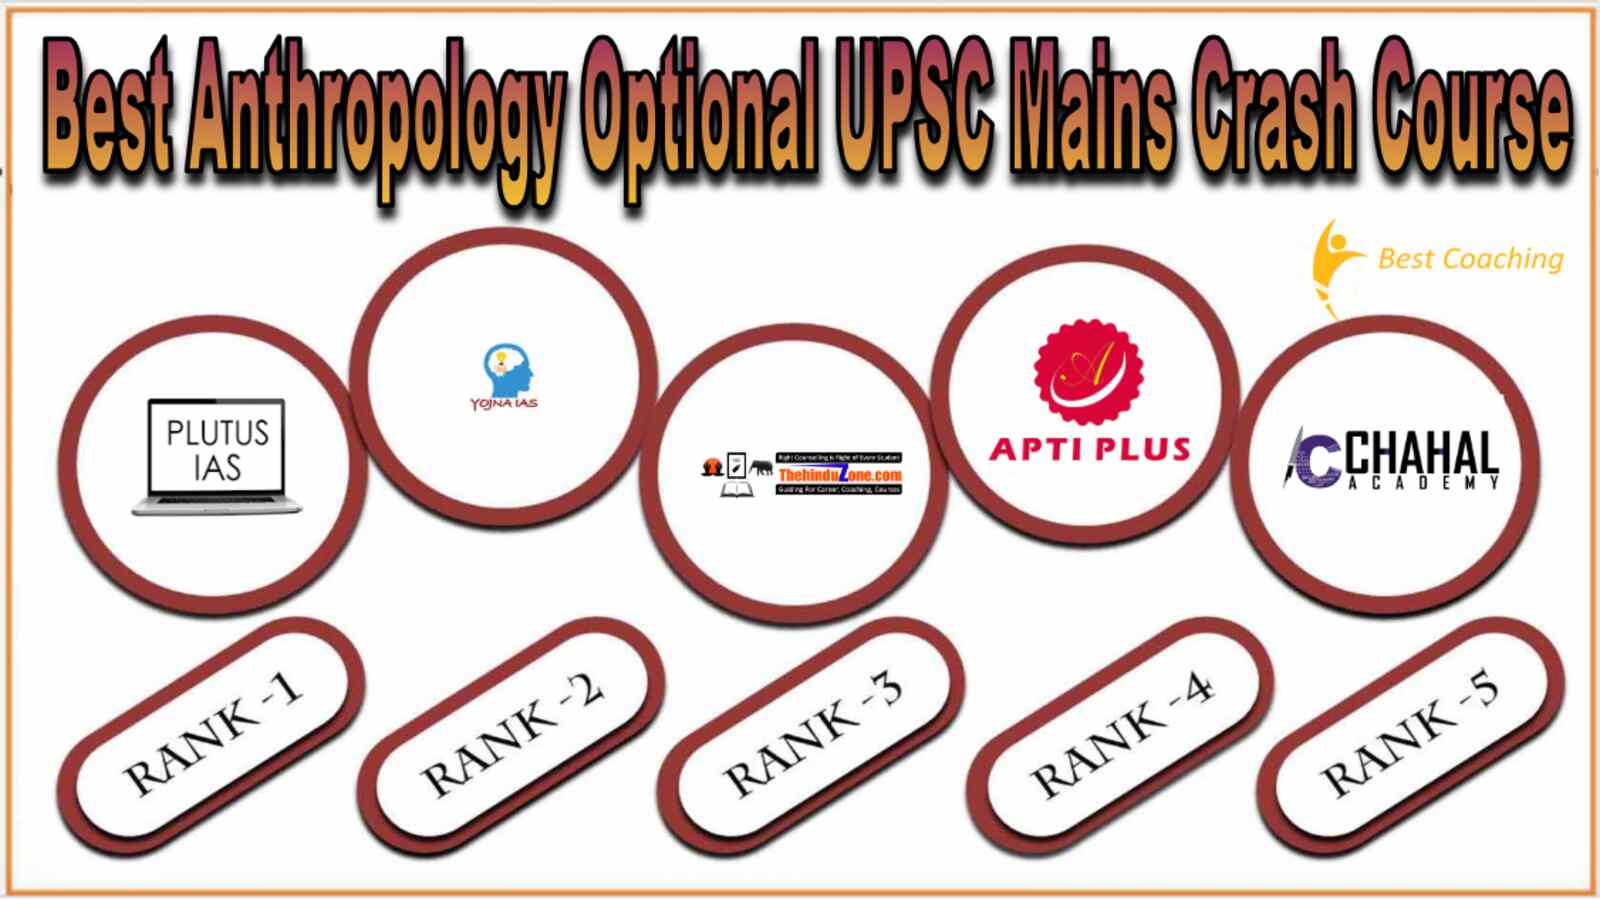 Best Anthropology Optional UPSC mains Crash Course